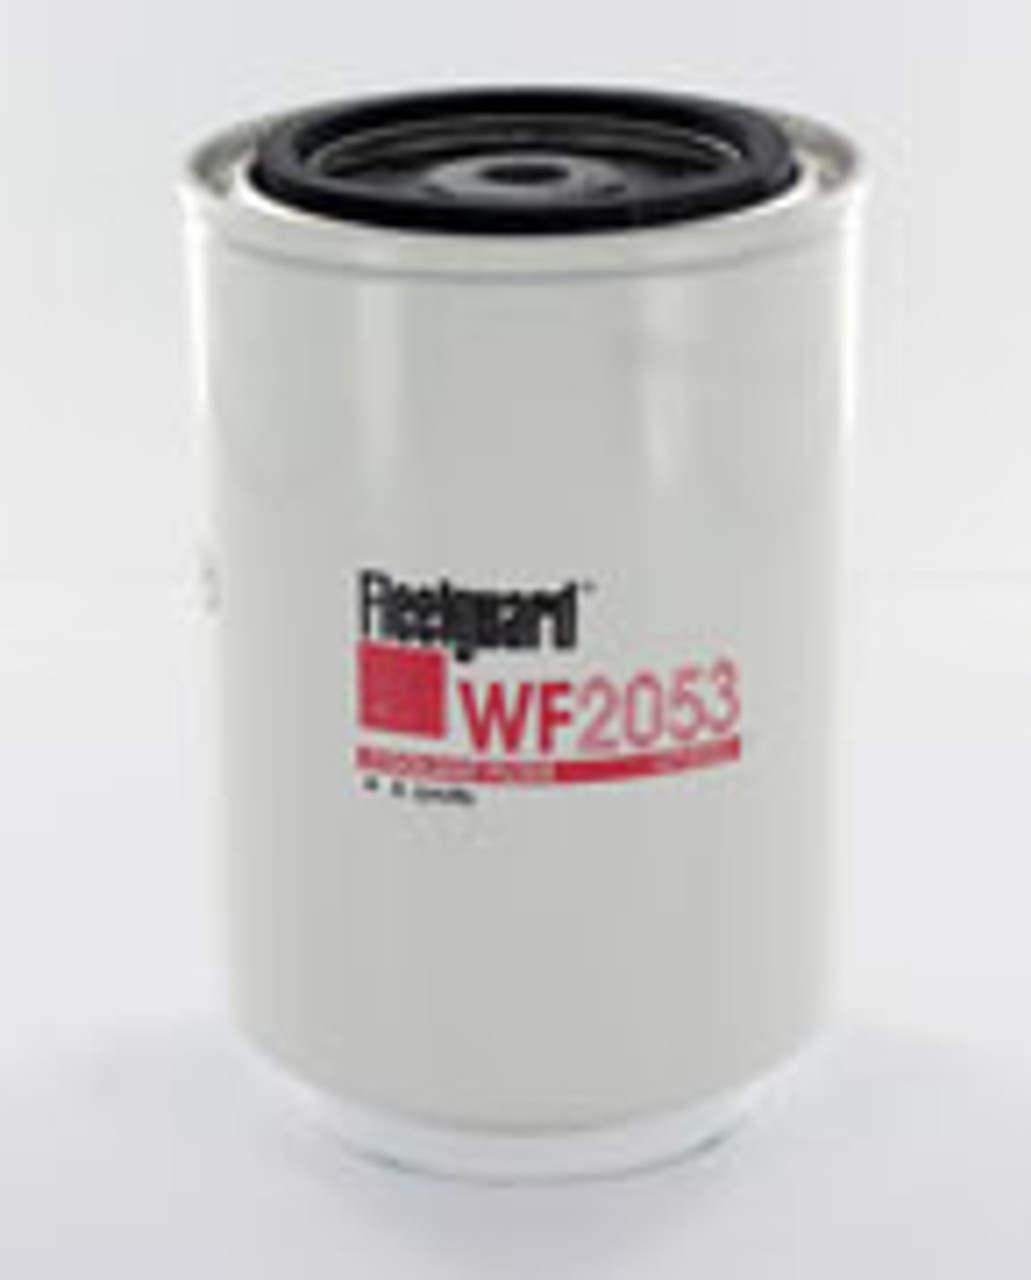 WF2053: Fleetguard Spin-On Water Filter